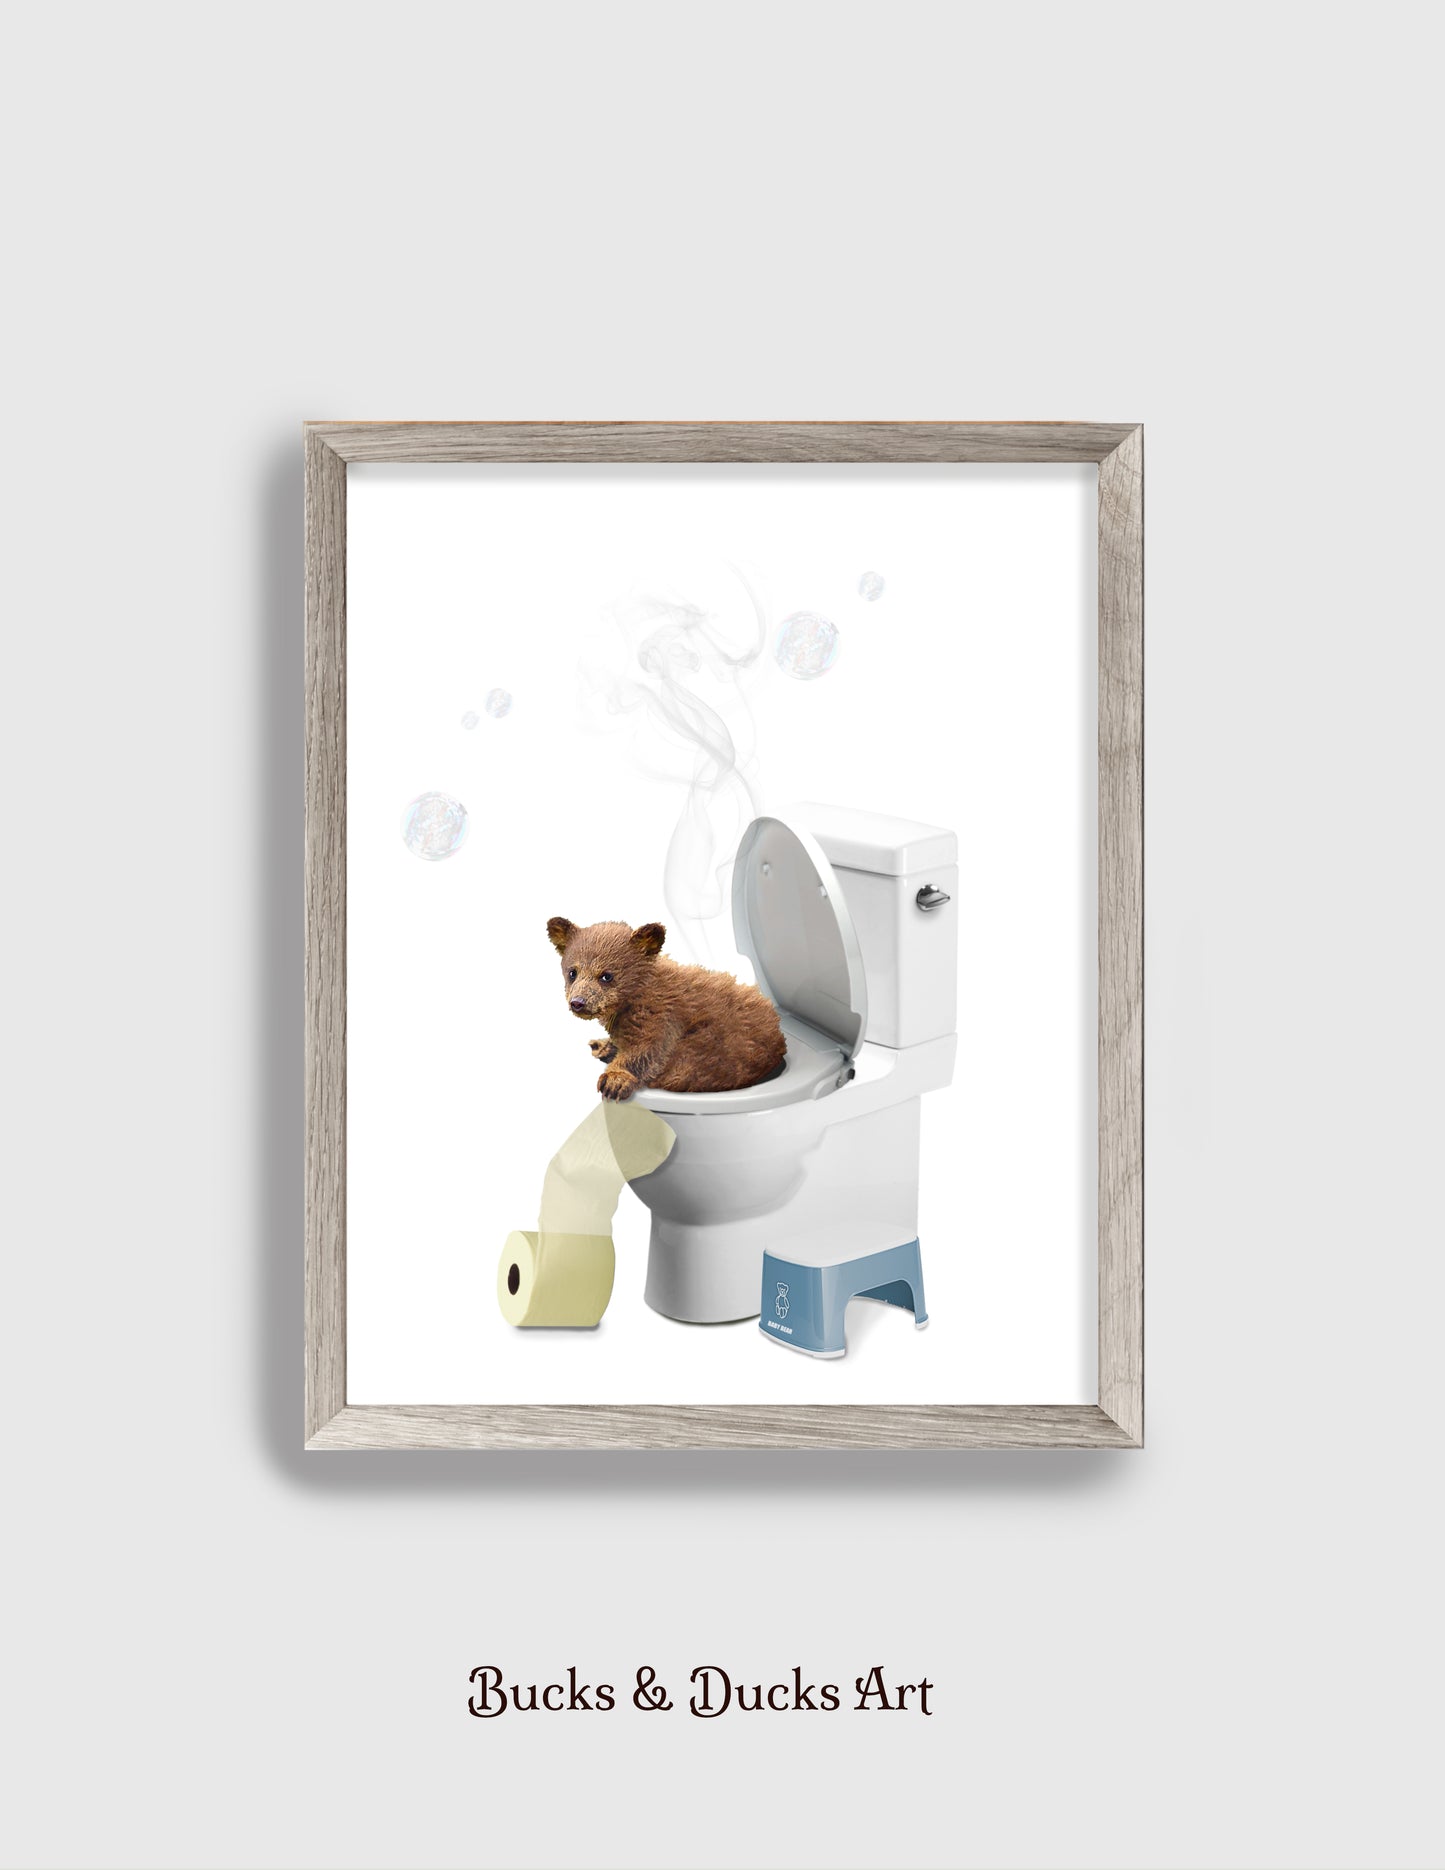 Bathroom Bear Family Set of 3 Prints, Woodland Animal Decor, Rustic Toilet Wall Art Humor